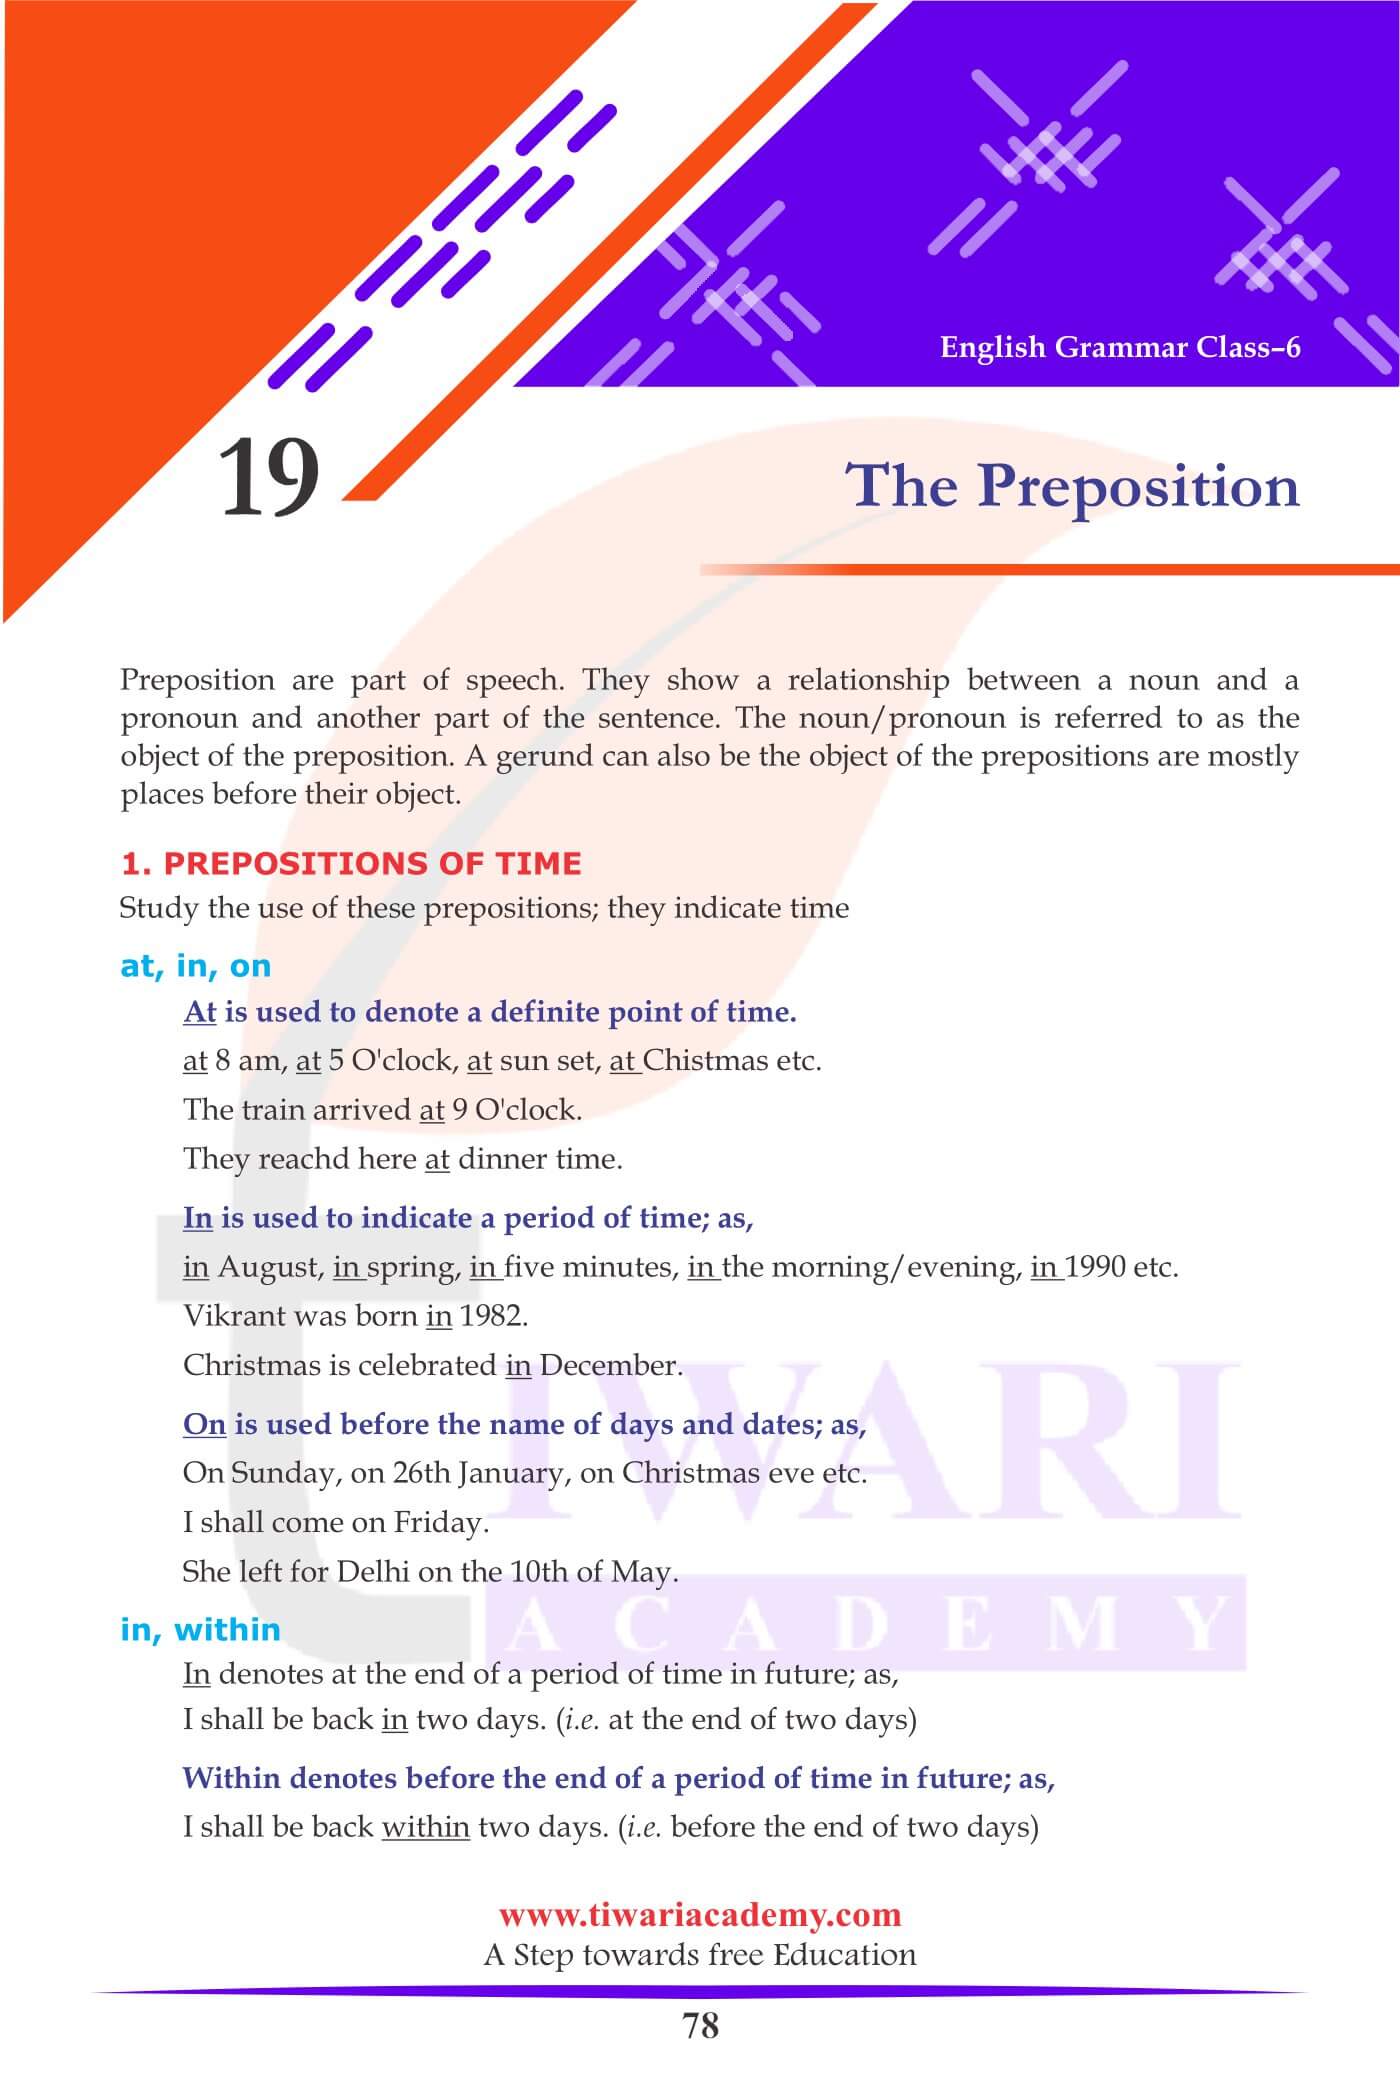 Class 6 English Grammar Chapter 19 the Preposition